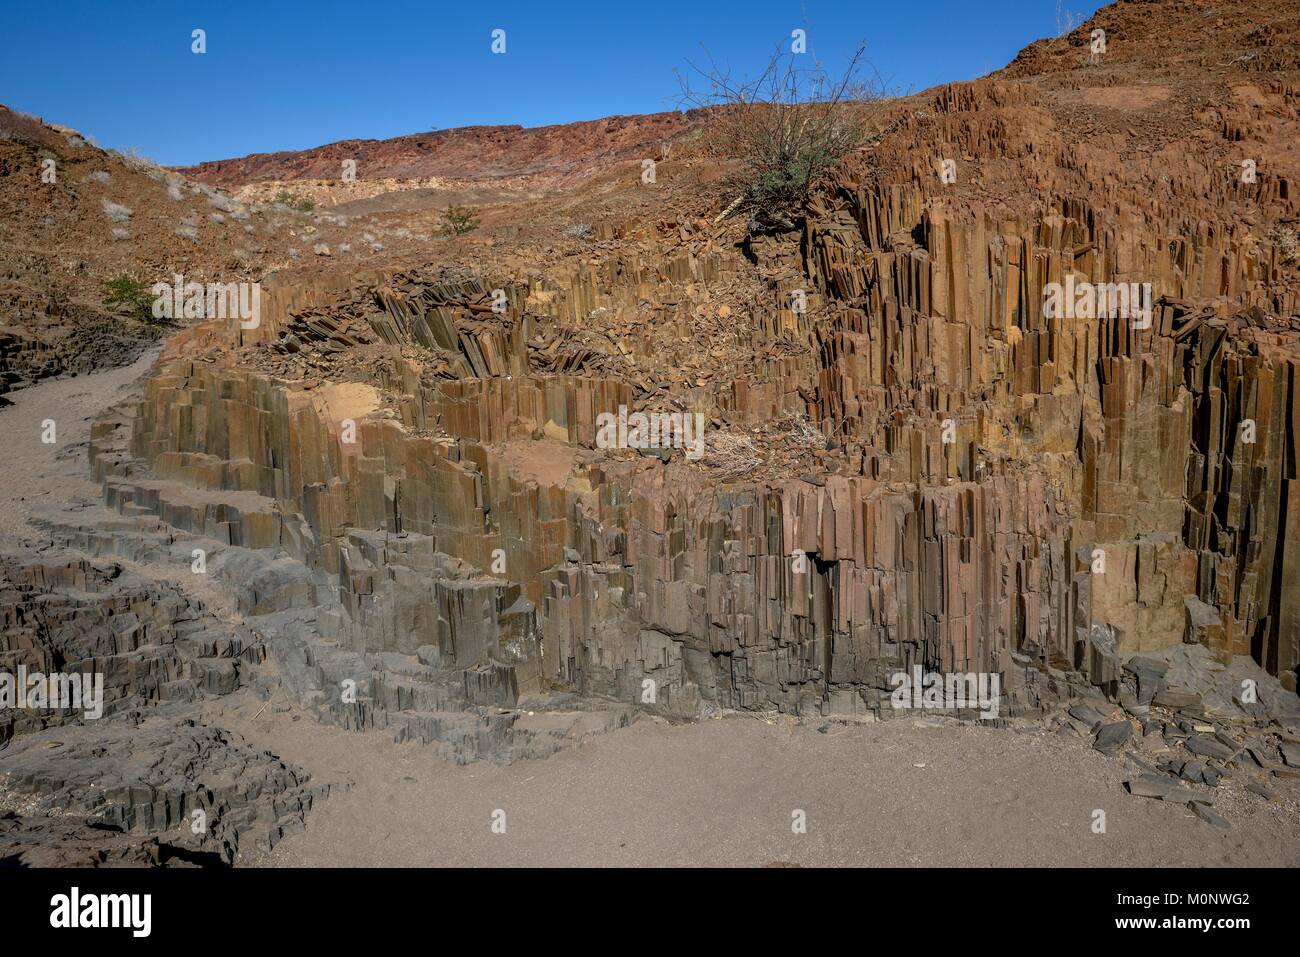 Columnas de basalto,órgano de tubos hechos de basalto,cerca de Twyfelfontein,región Kunene,Namibia Foto de stock